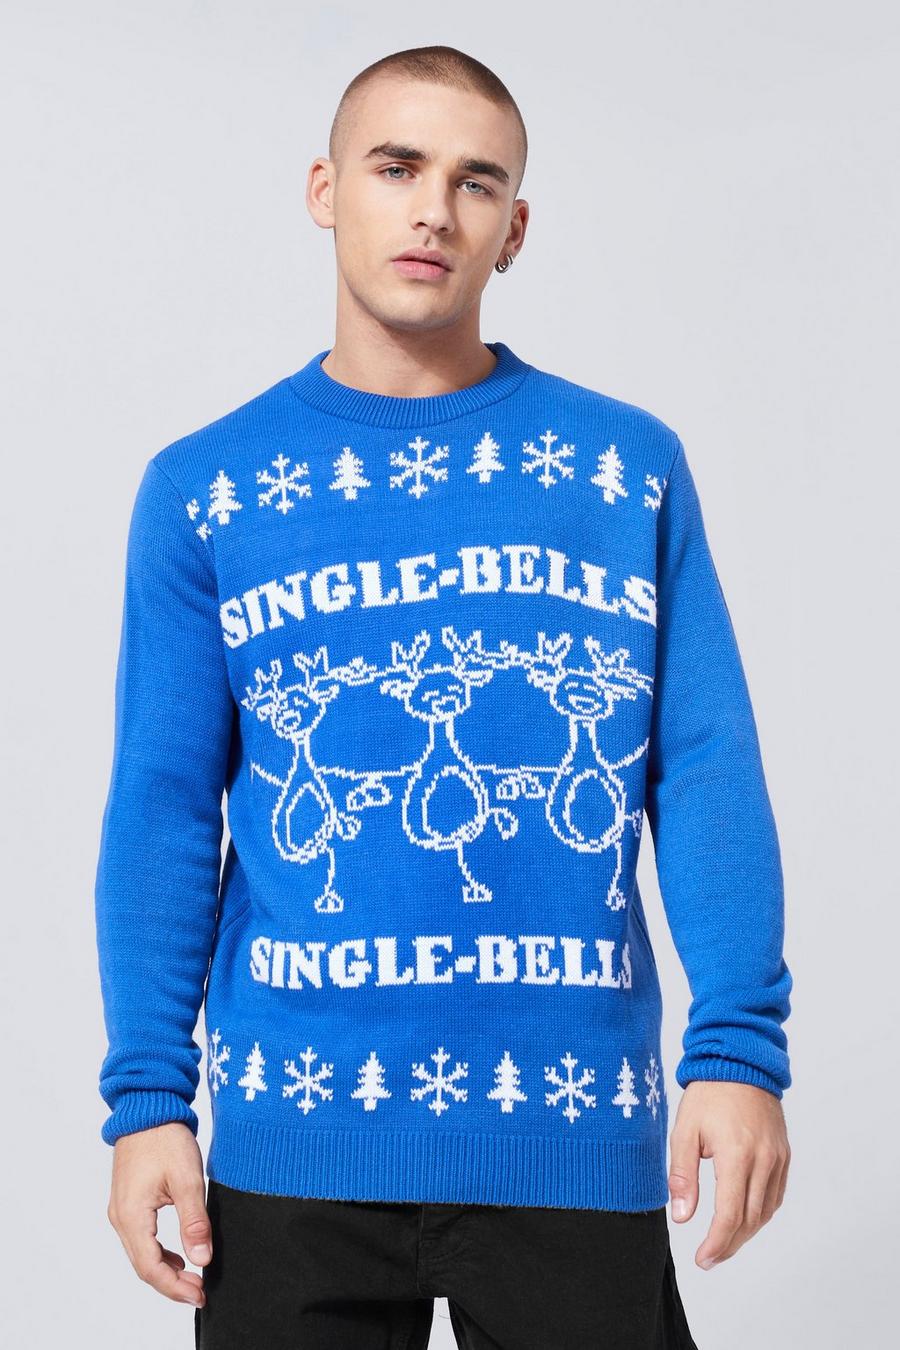 Maglione natalizio con slogan Single Bells, Navy azul marino image number 1